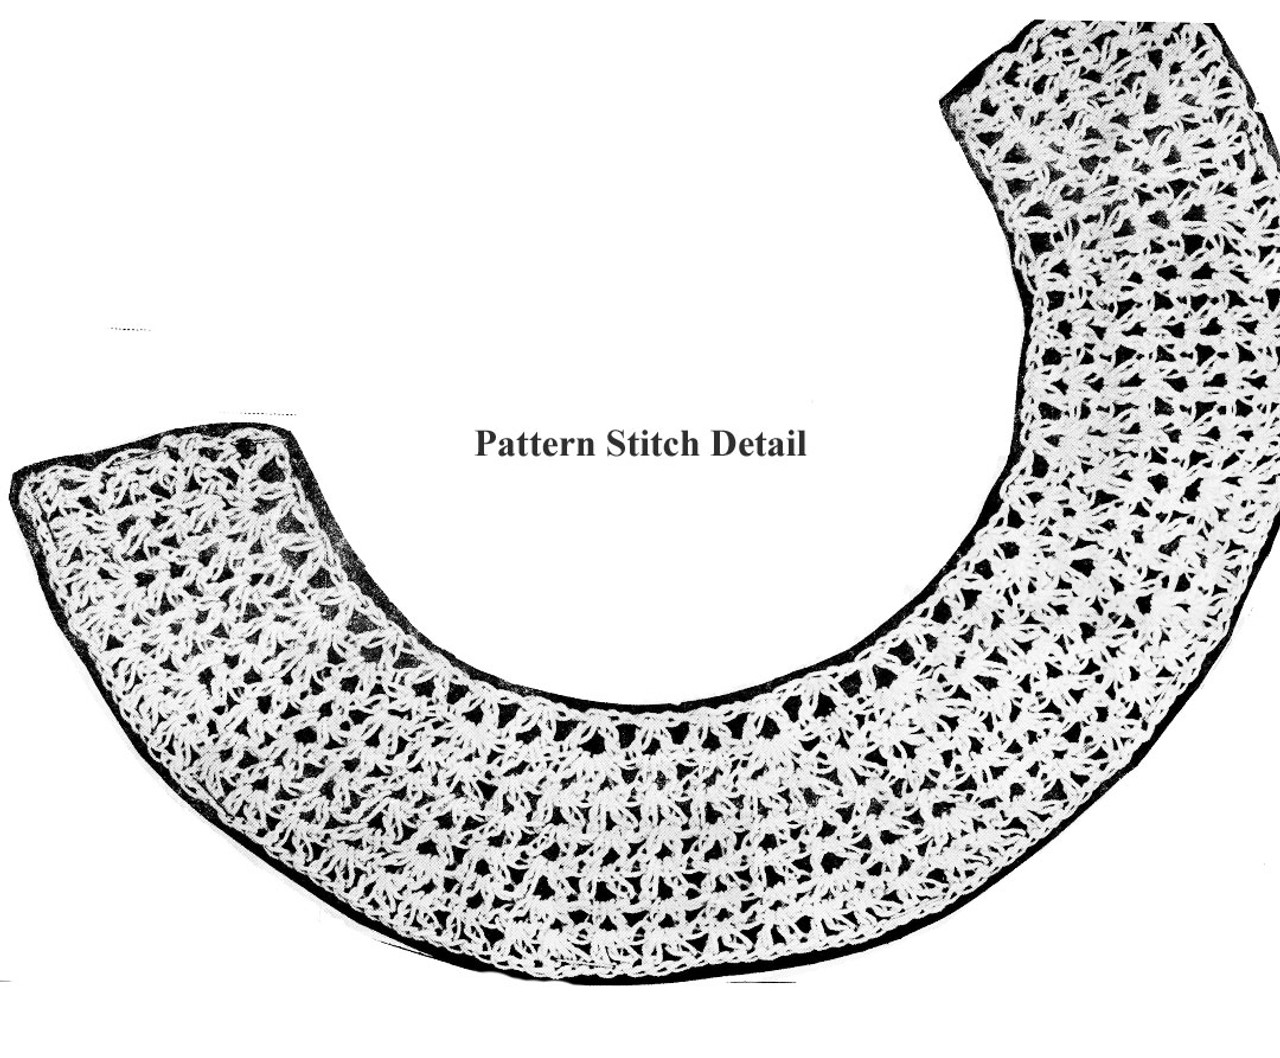 Pattern Stitch Illustration for Crochet Capelet